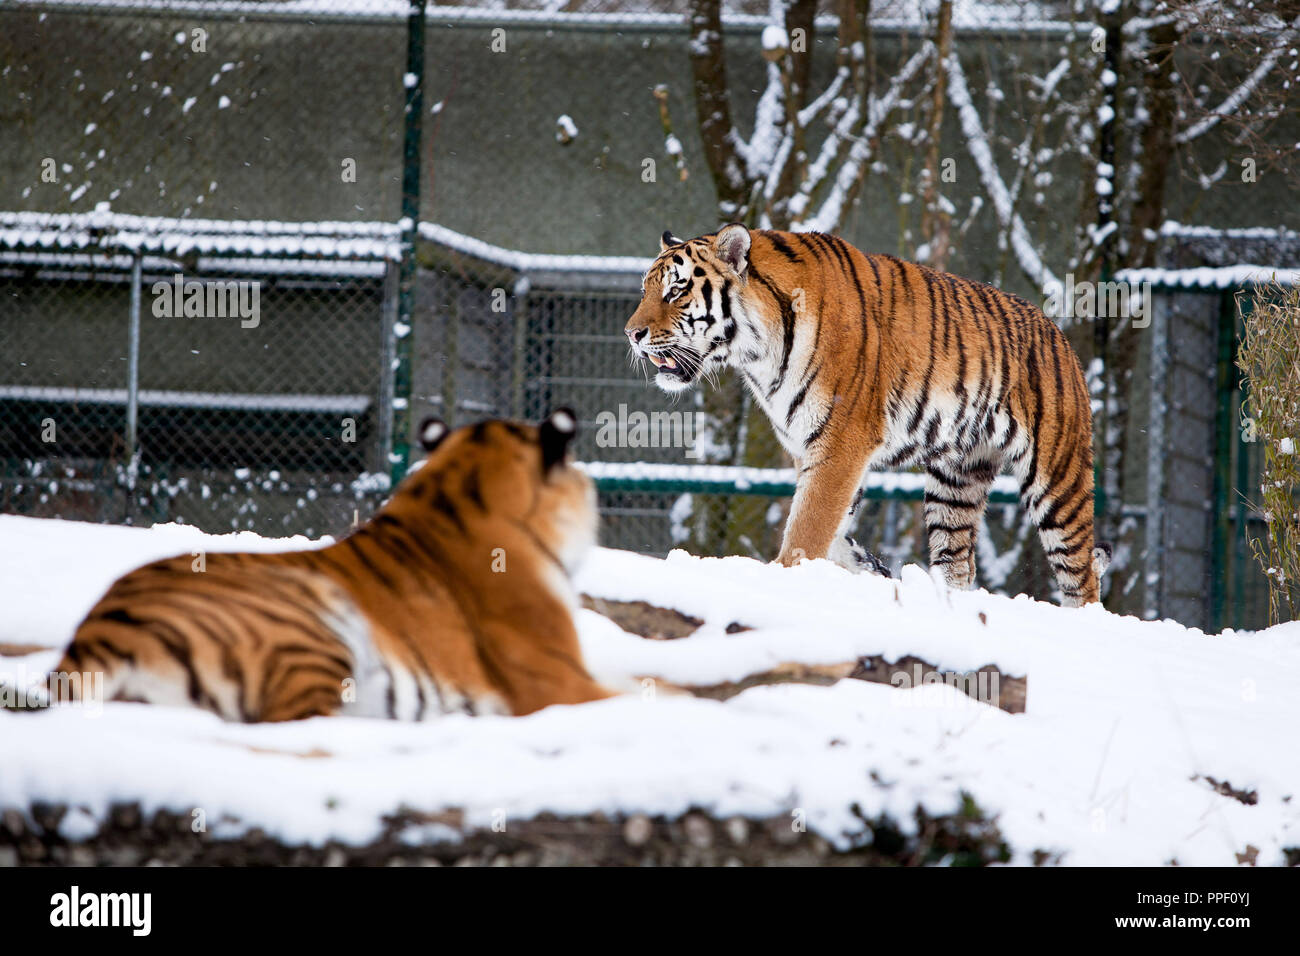 Siberian tigers in the snowy Munich Zoo Tierpark Hellabrunn. Stock Photo